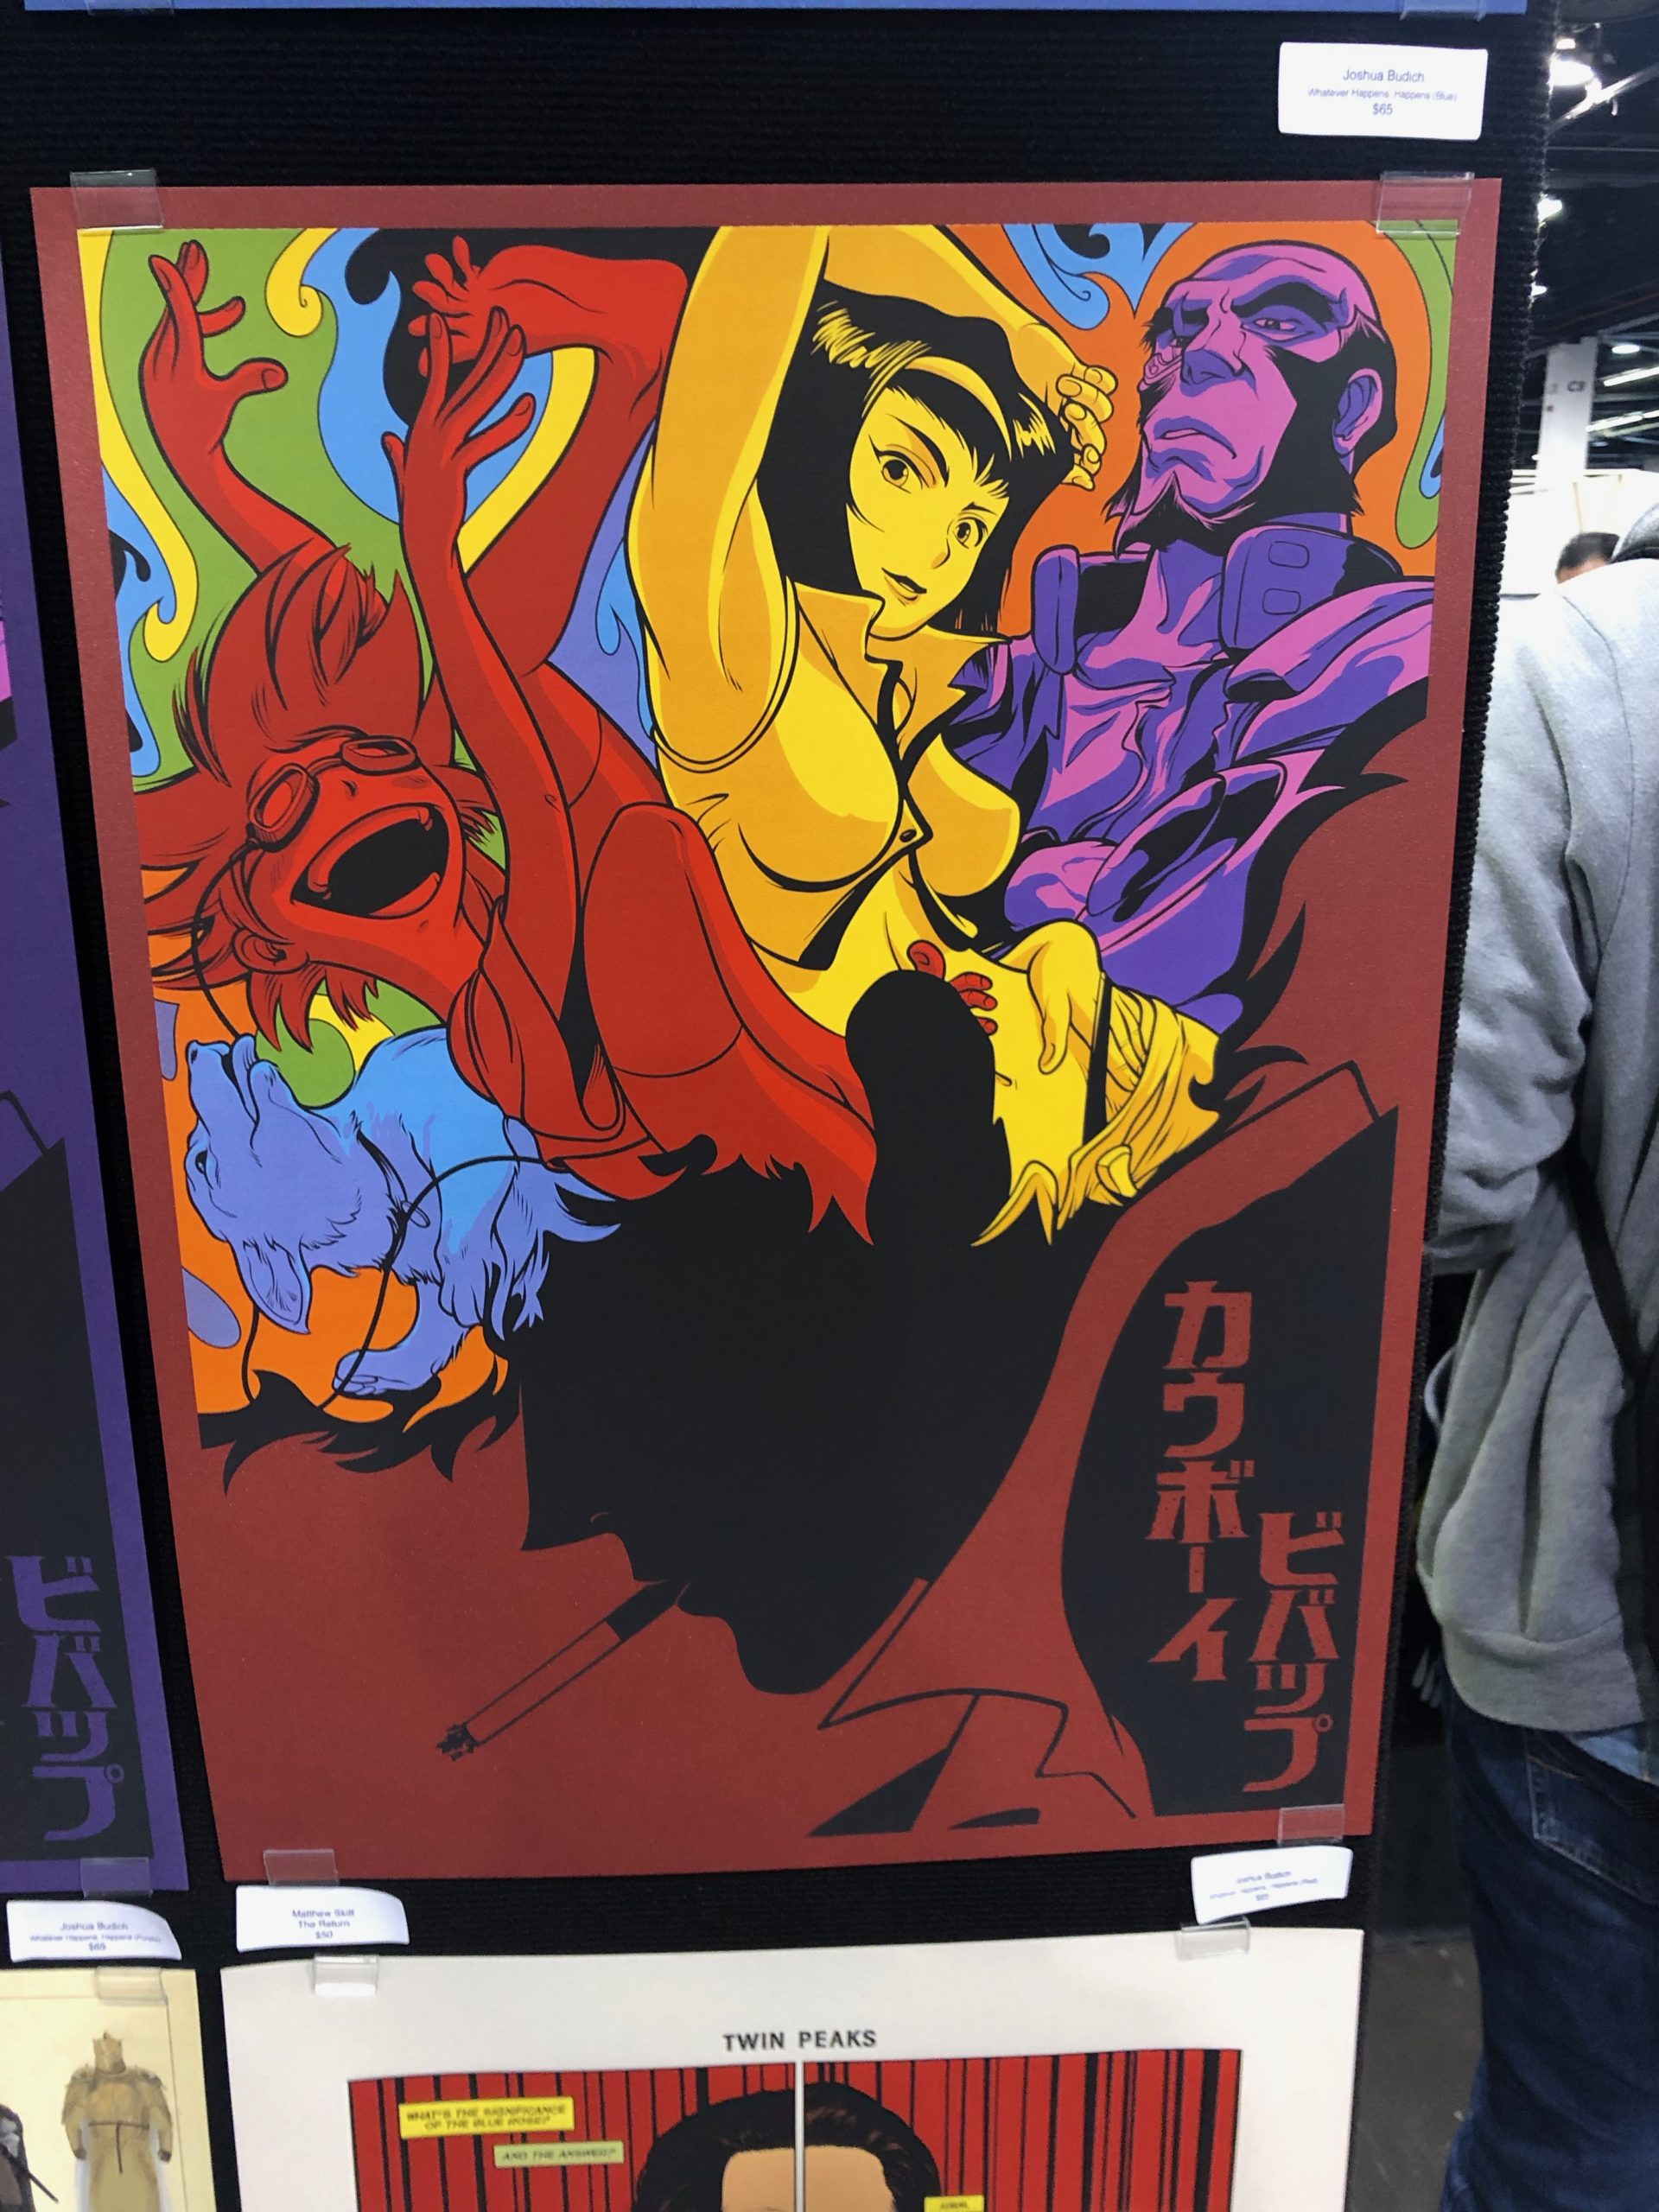 A Cowboy Bebop poster at WonderCon 2019. Photo: Danny Pham/dorkaholics.